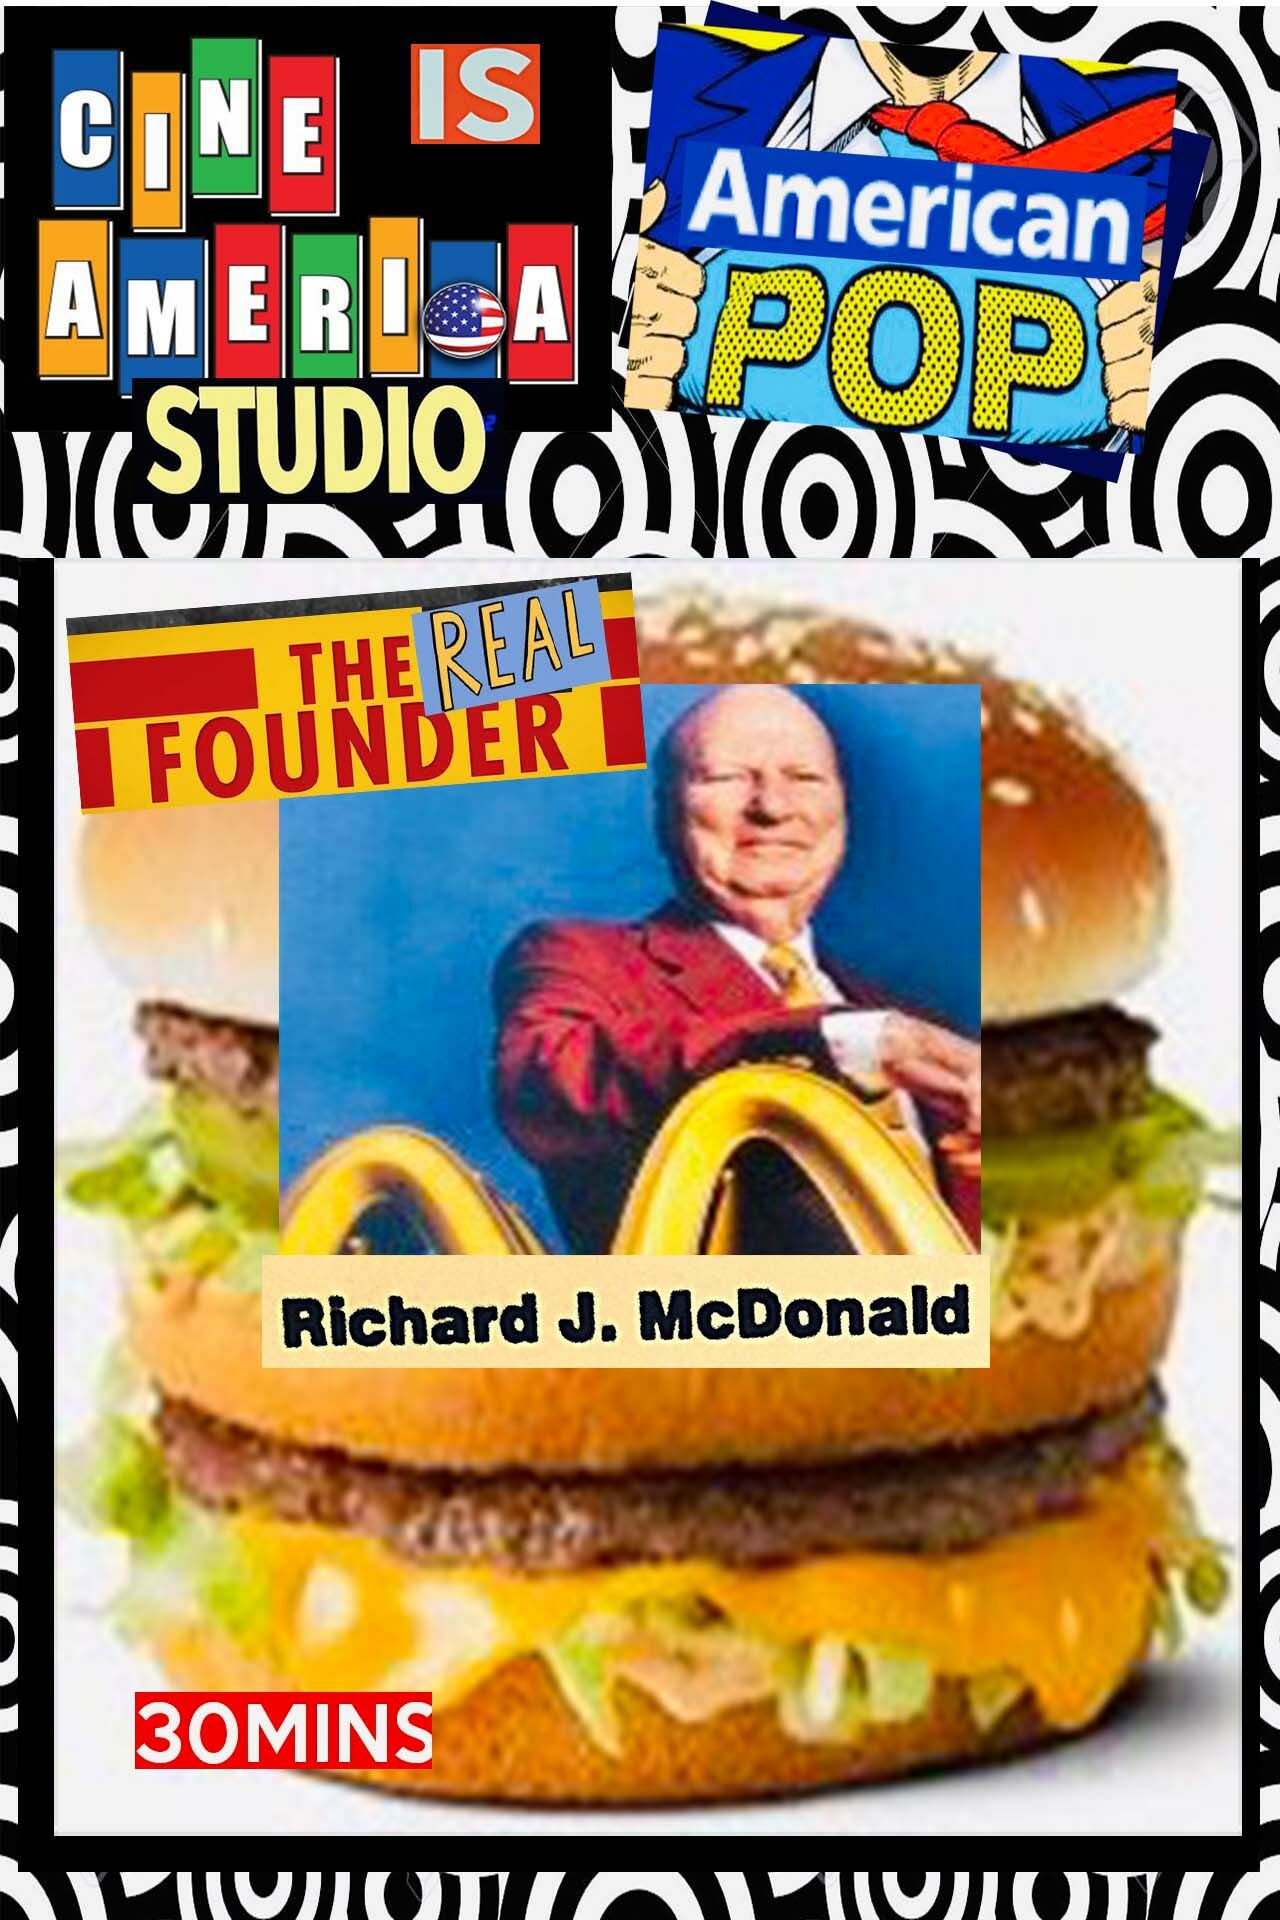 The Real Founder (of McDonald's Hamburgers)